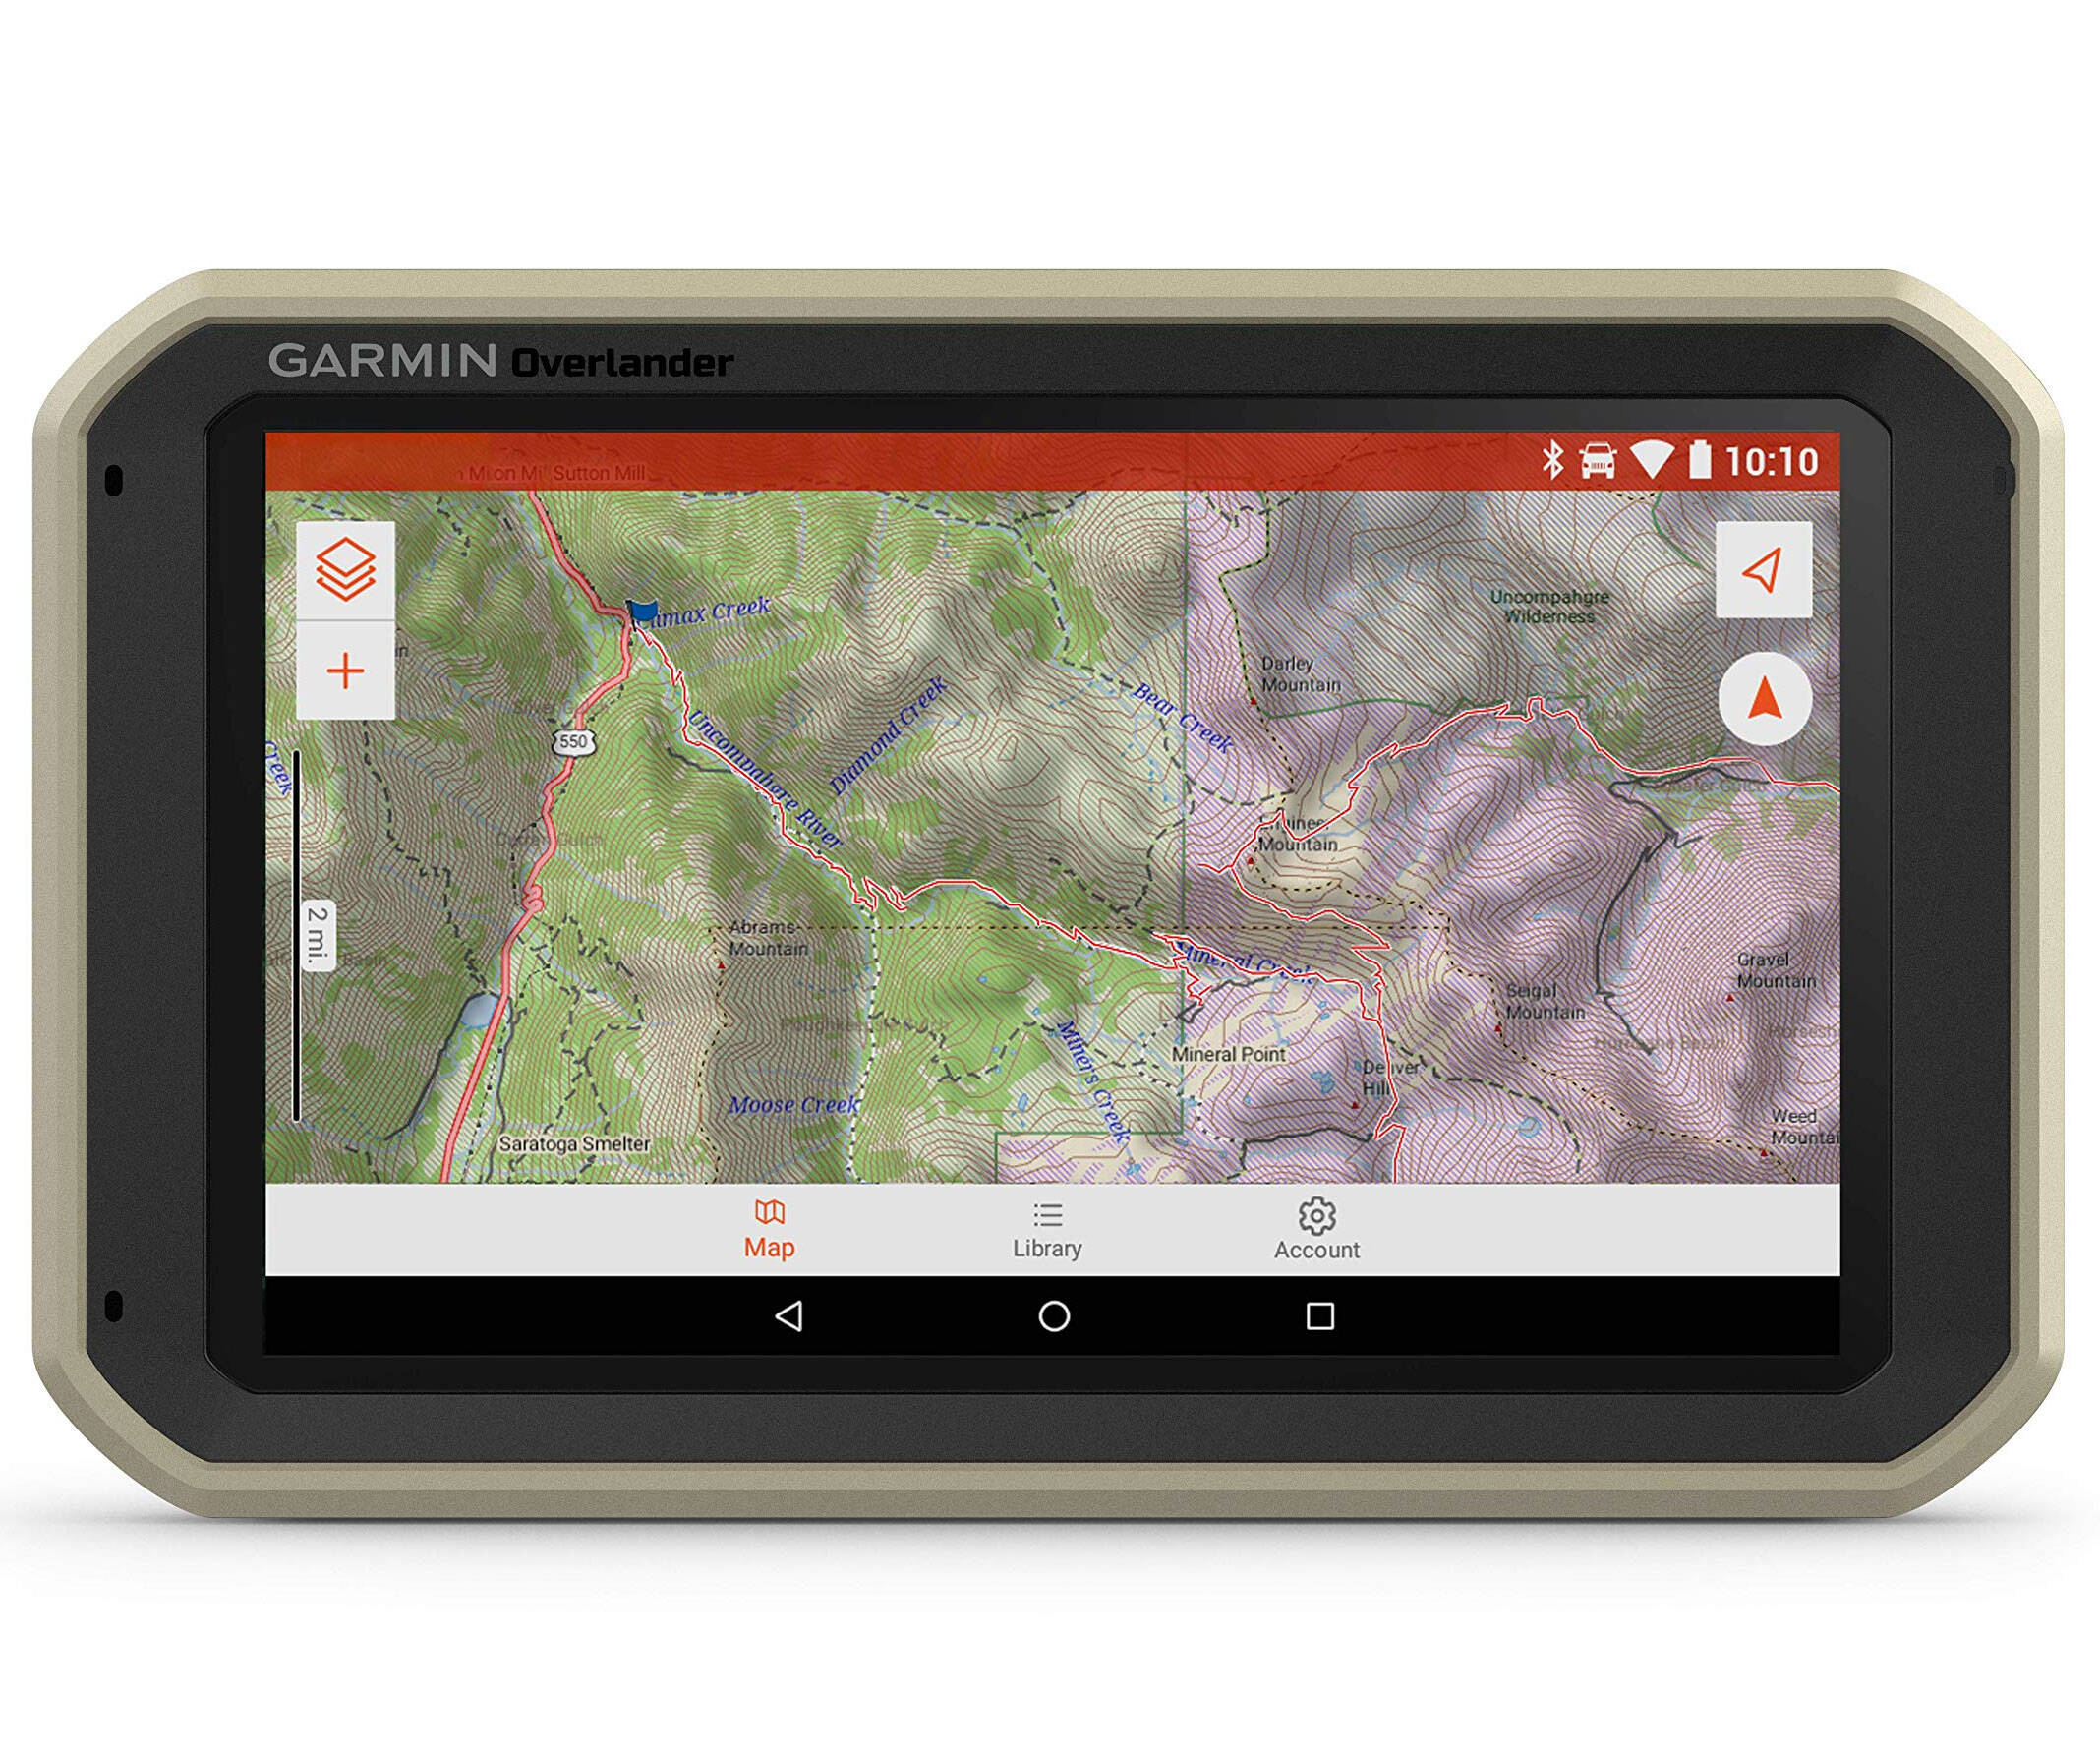 Garmin Overlander GPS - coolthings.us